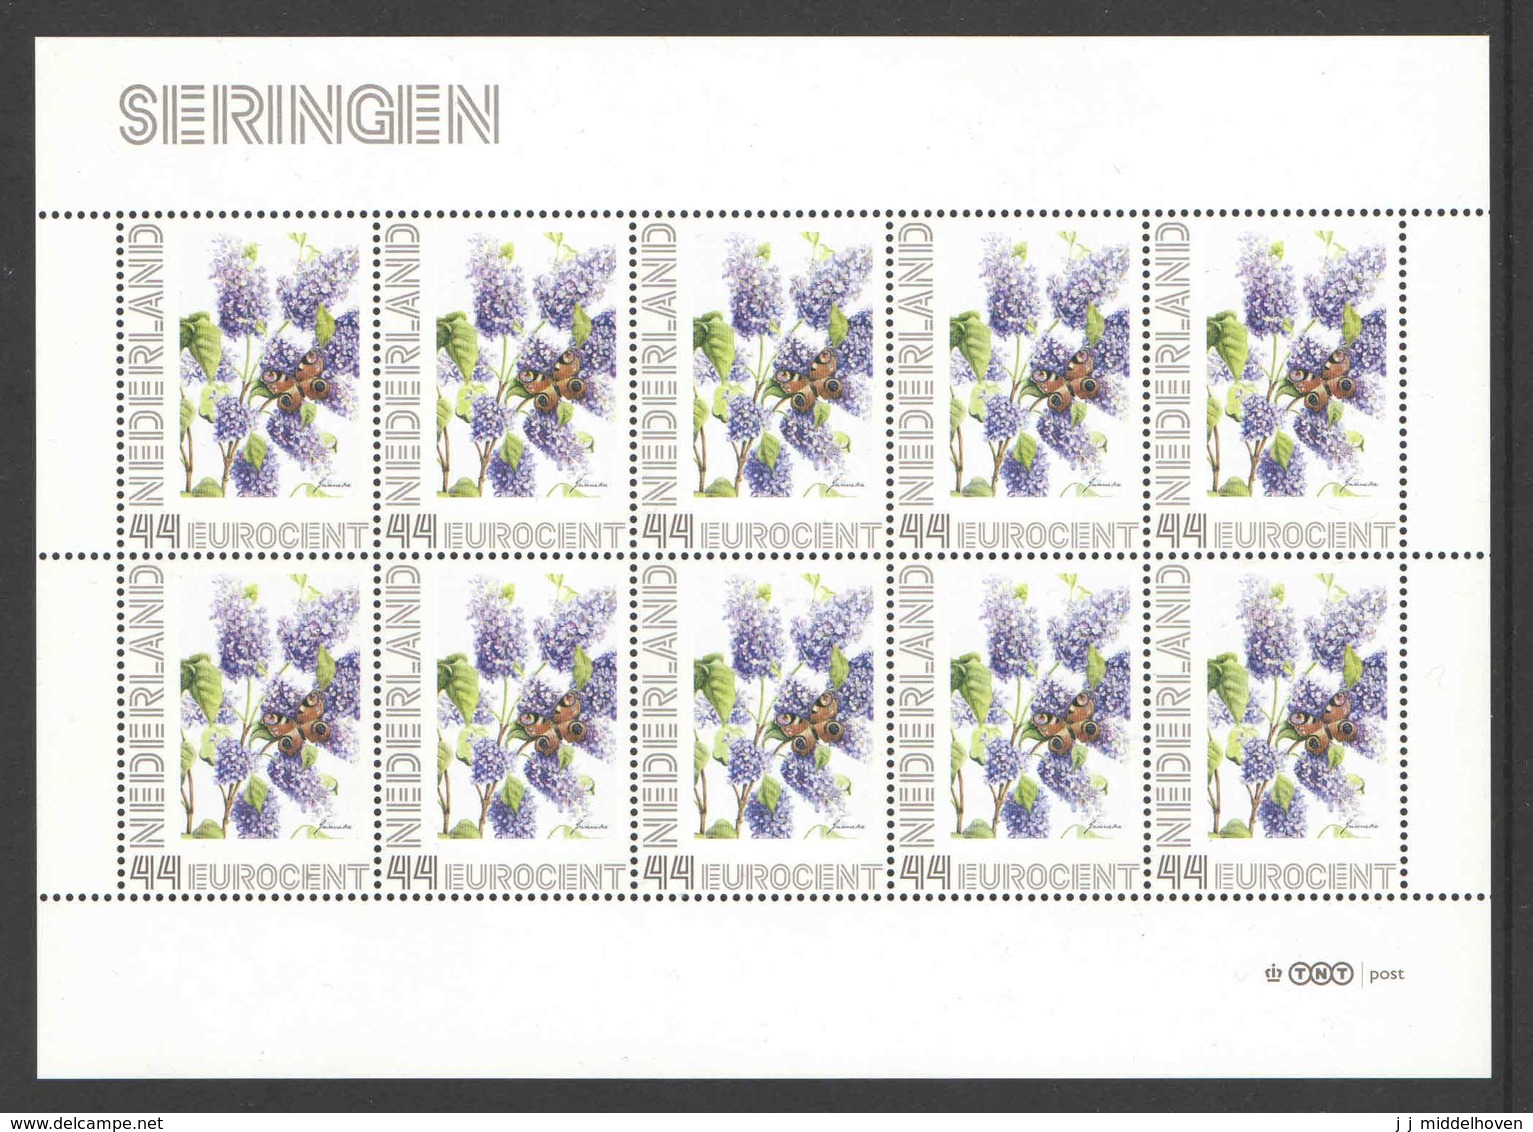 Nederland Postfris/MNH, Janneke Brinkman: Bloemen, Flowers, Fleurs. Seringen - Personnalized Stamps